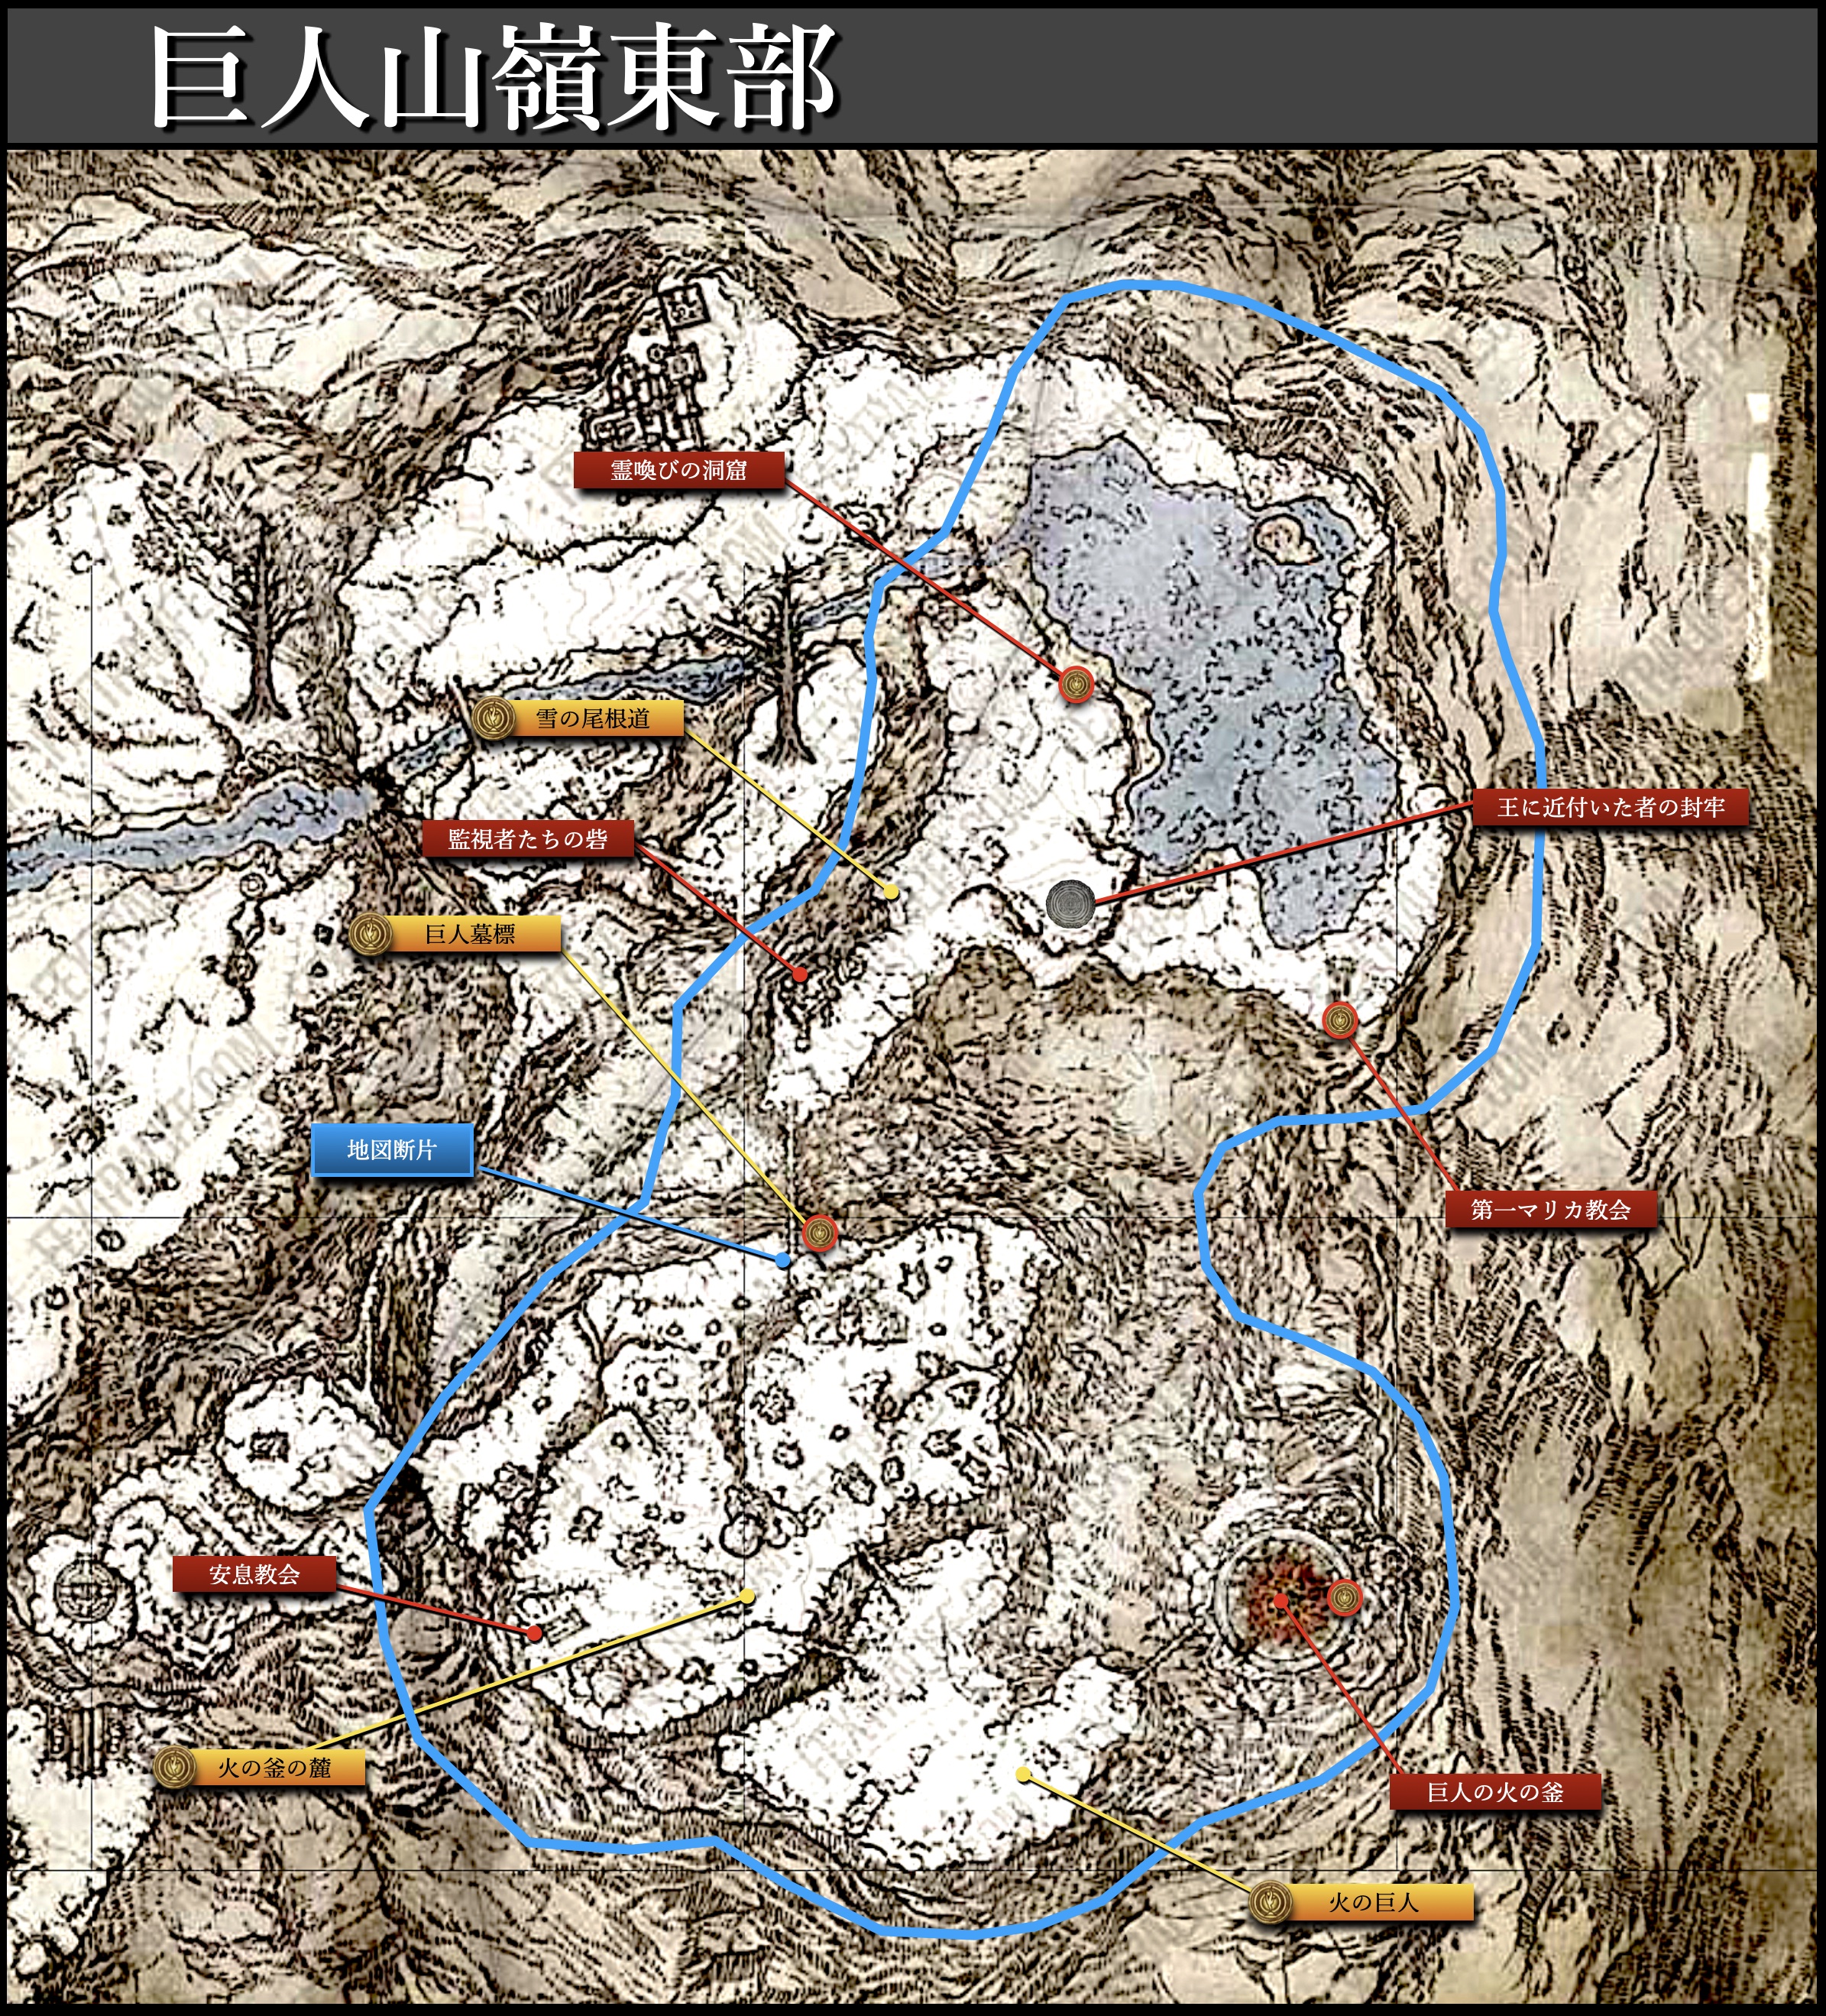 eldenring-giants-east-map-2300px